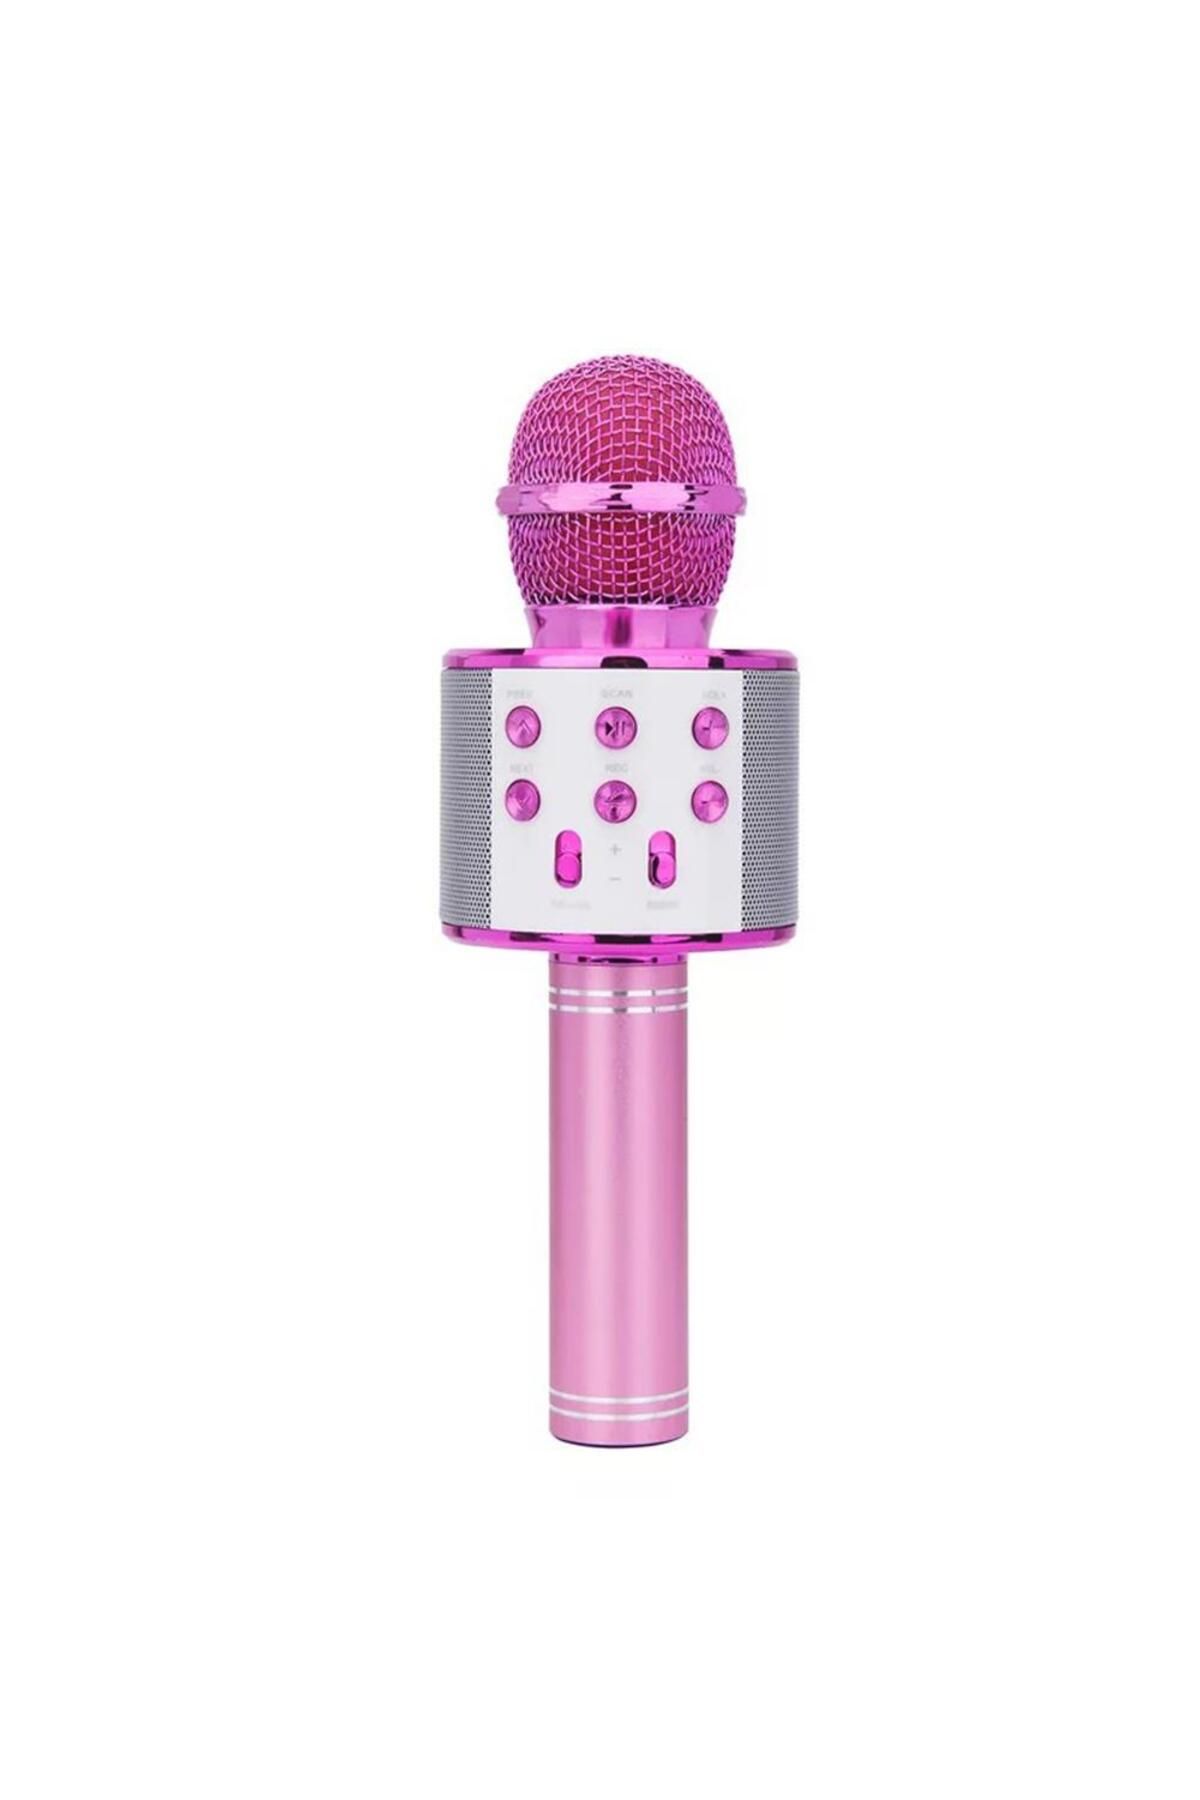 Torima WS-858 Karaoke Mikrofon Aux Usb Ve Sd Kart Girişli Bluetooth Hoparlör Pembe